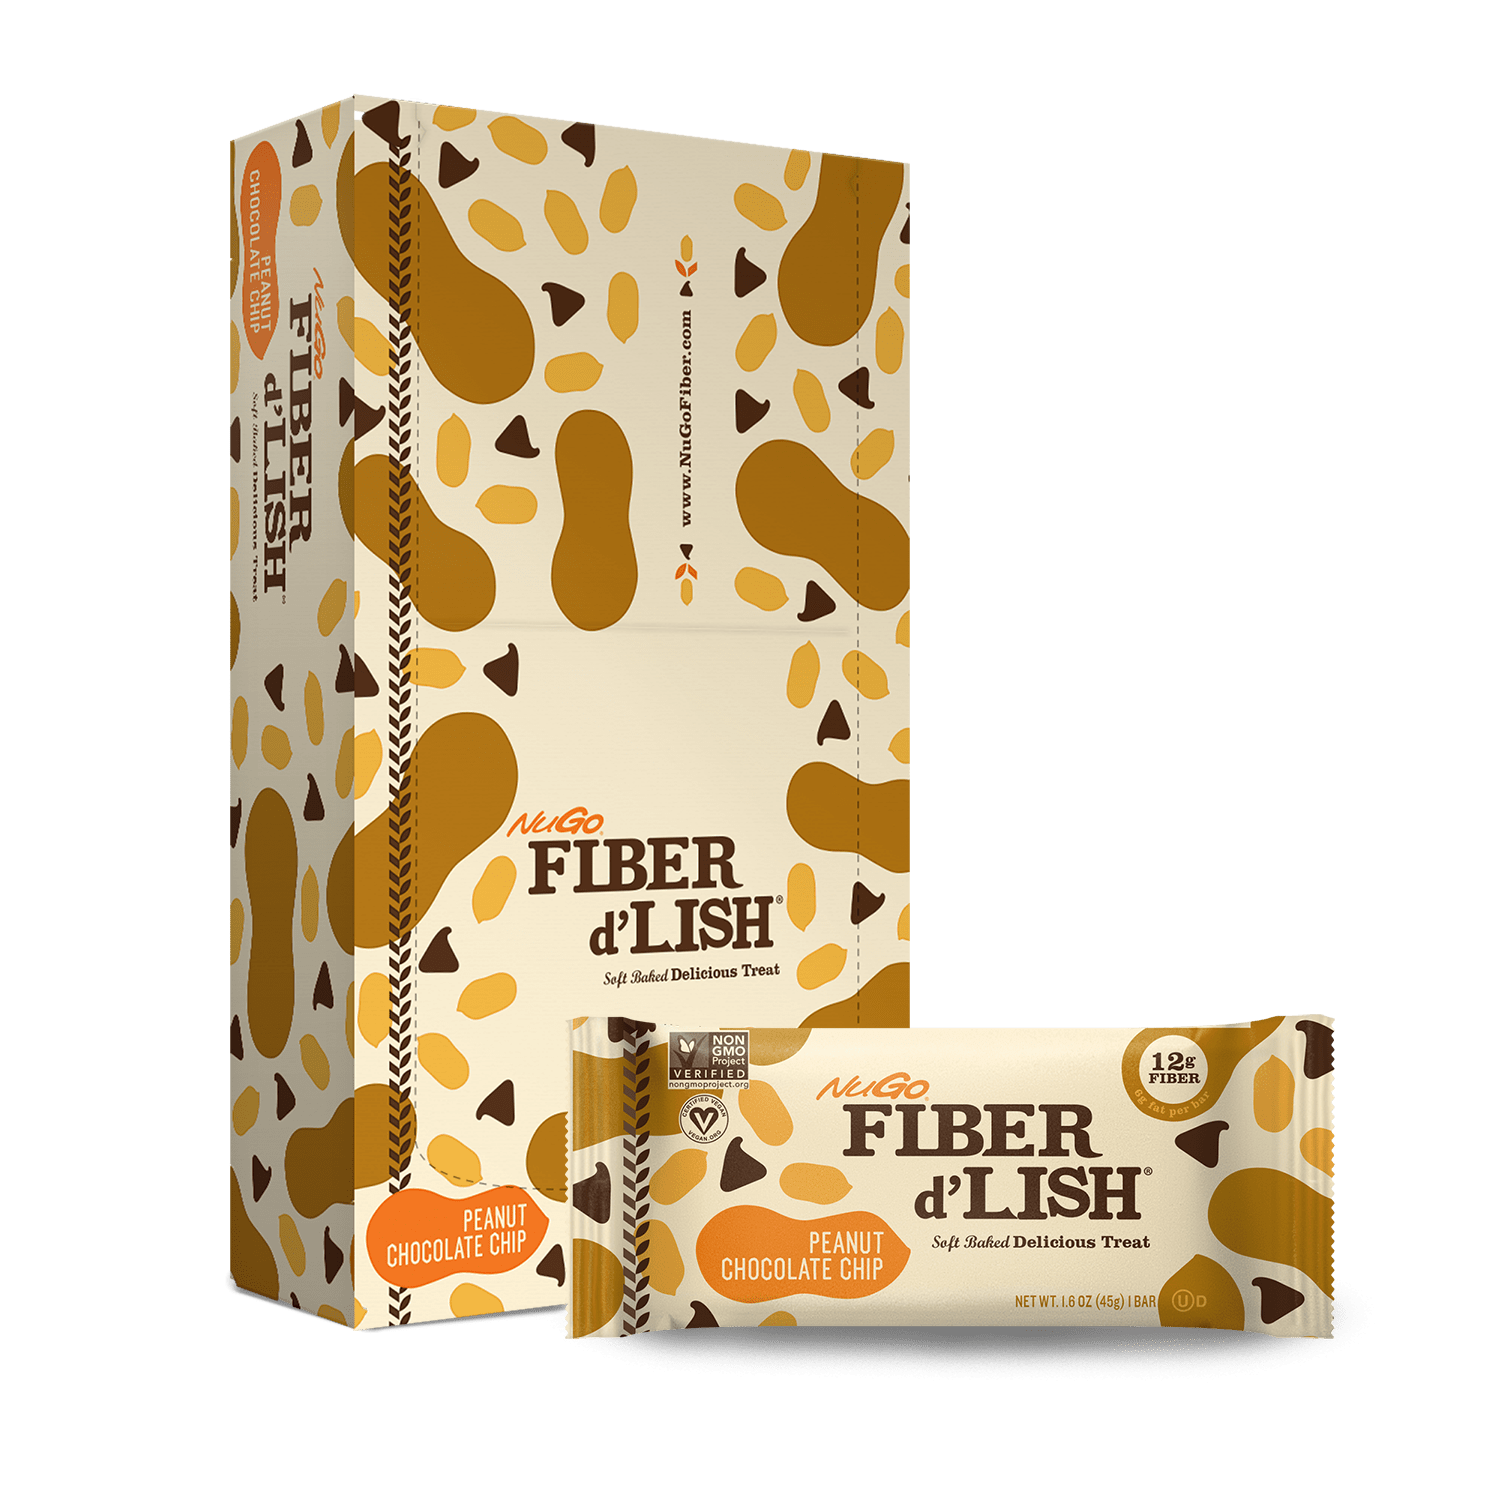 NuGo Fiber d'Lish Peanut Chocolate Chip Bar and Box